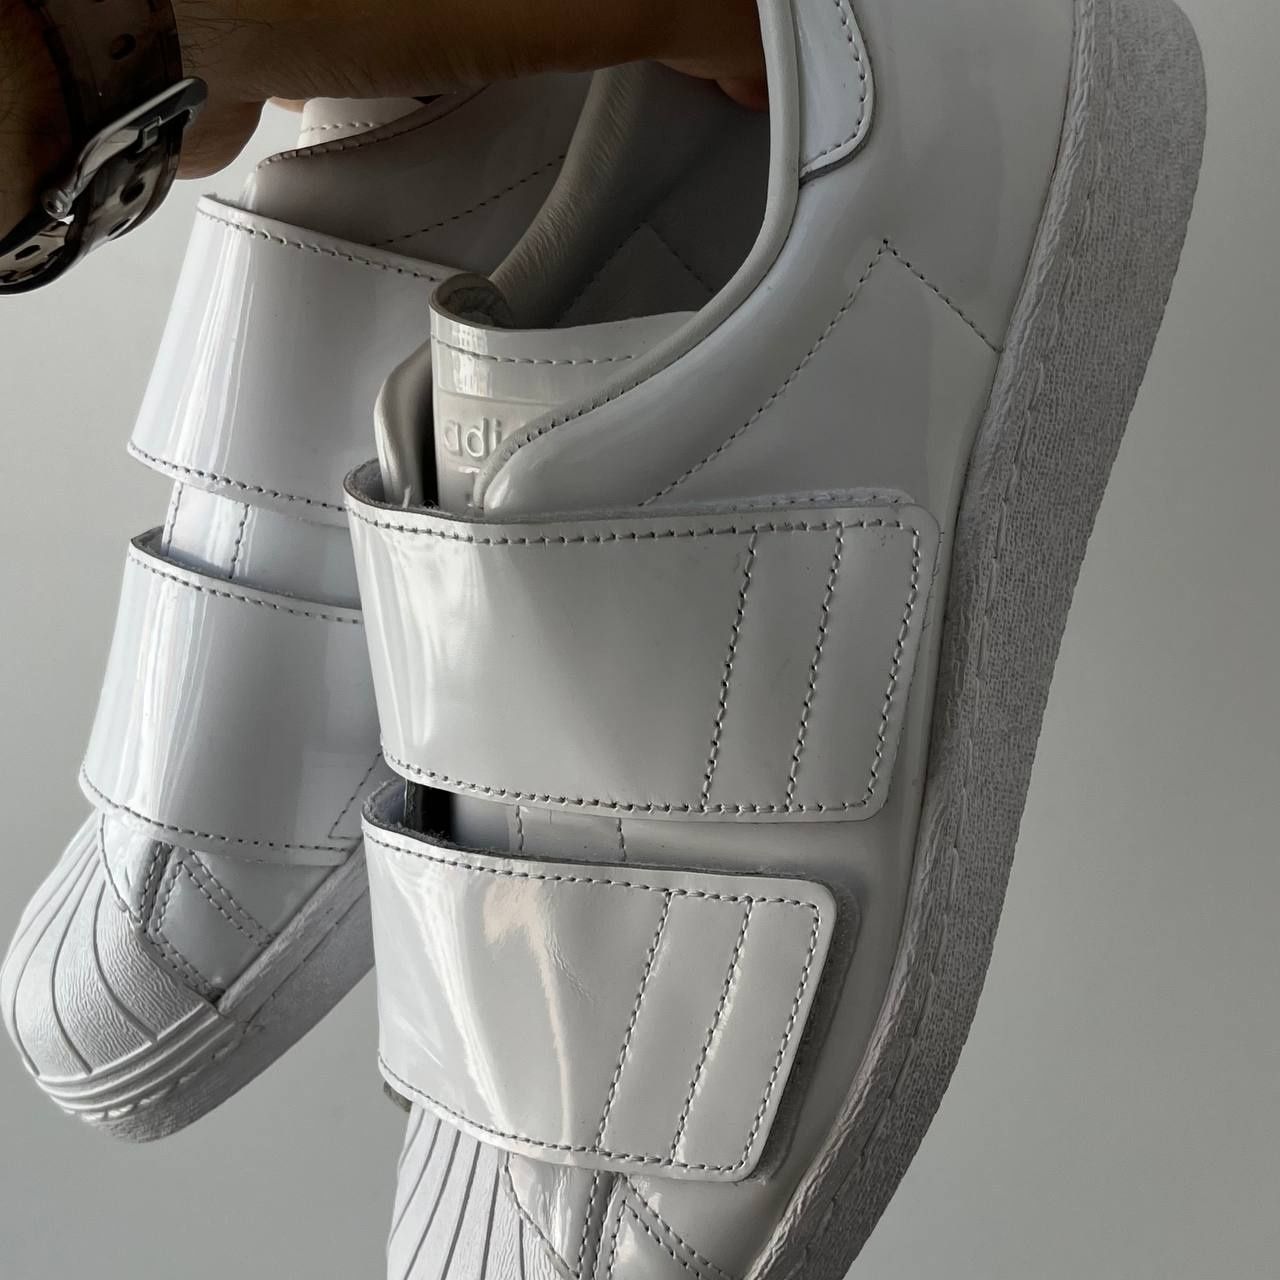 Adidas originals superstar strap patten leather кросівки кеди оригінал